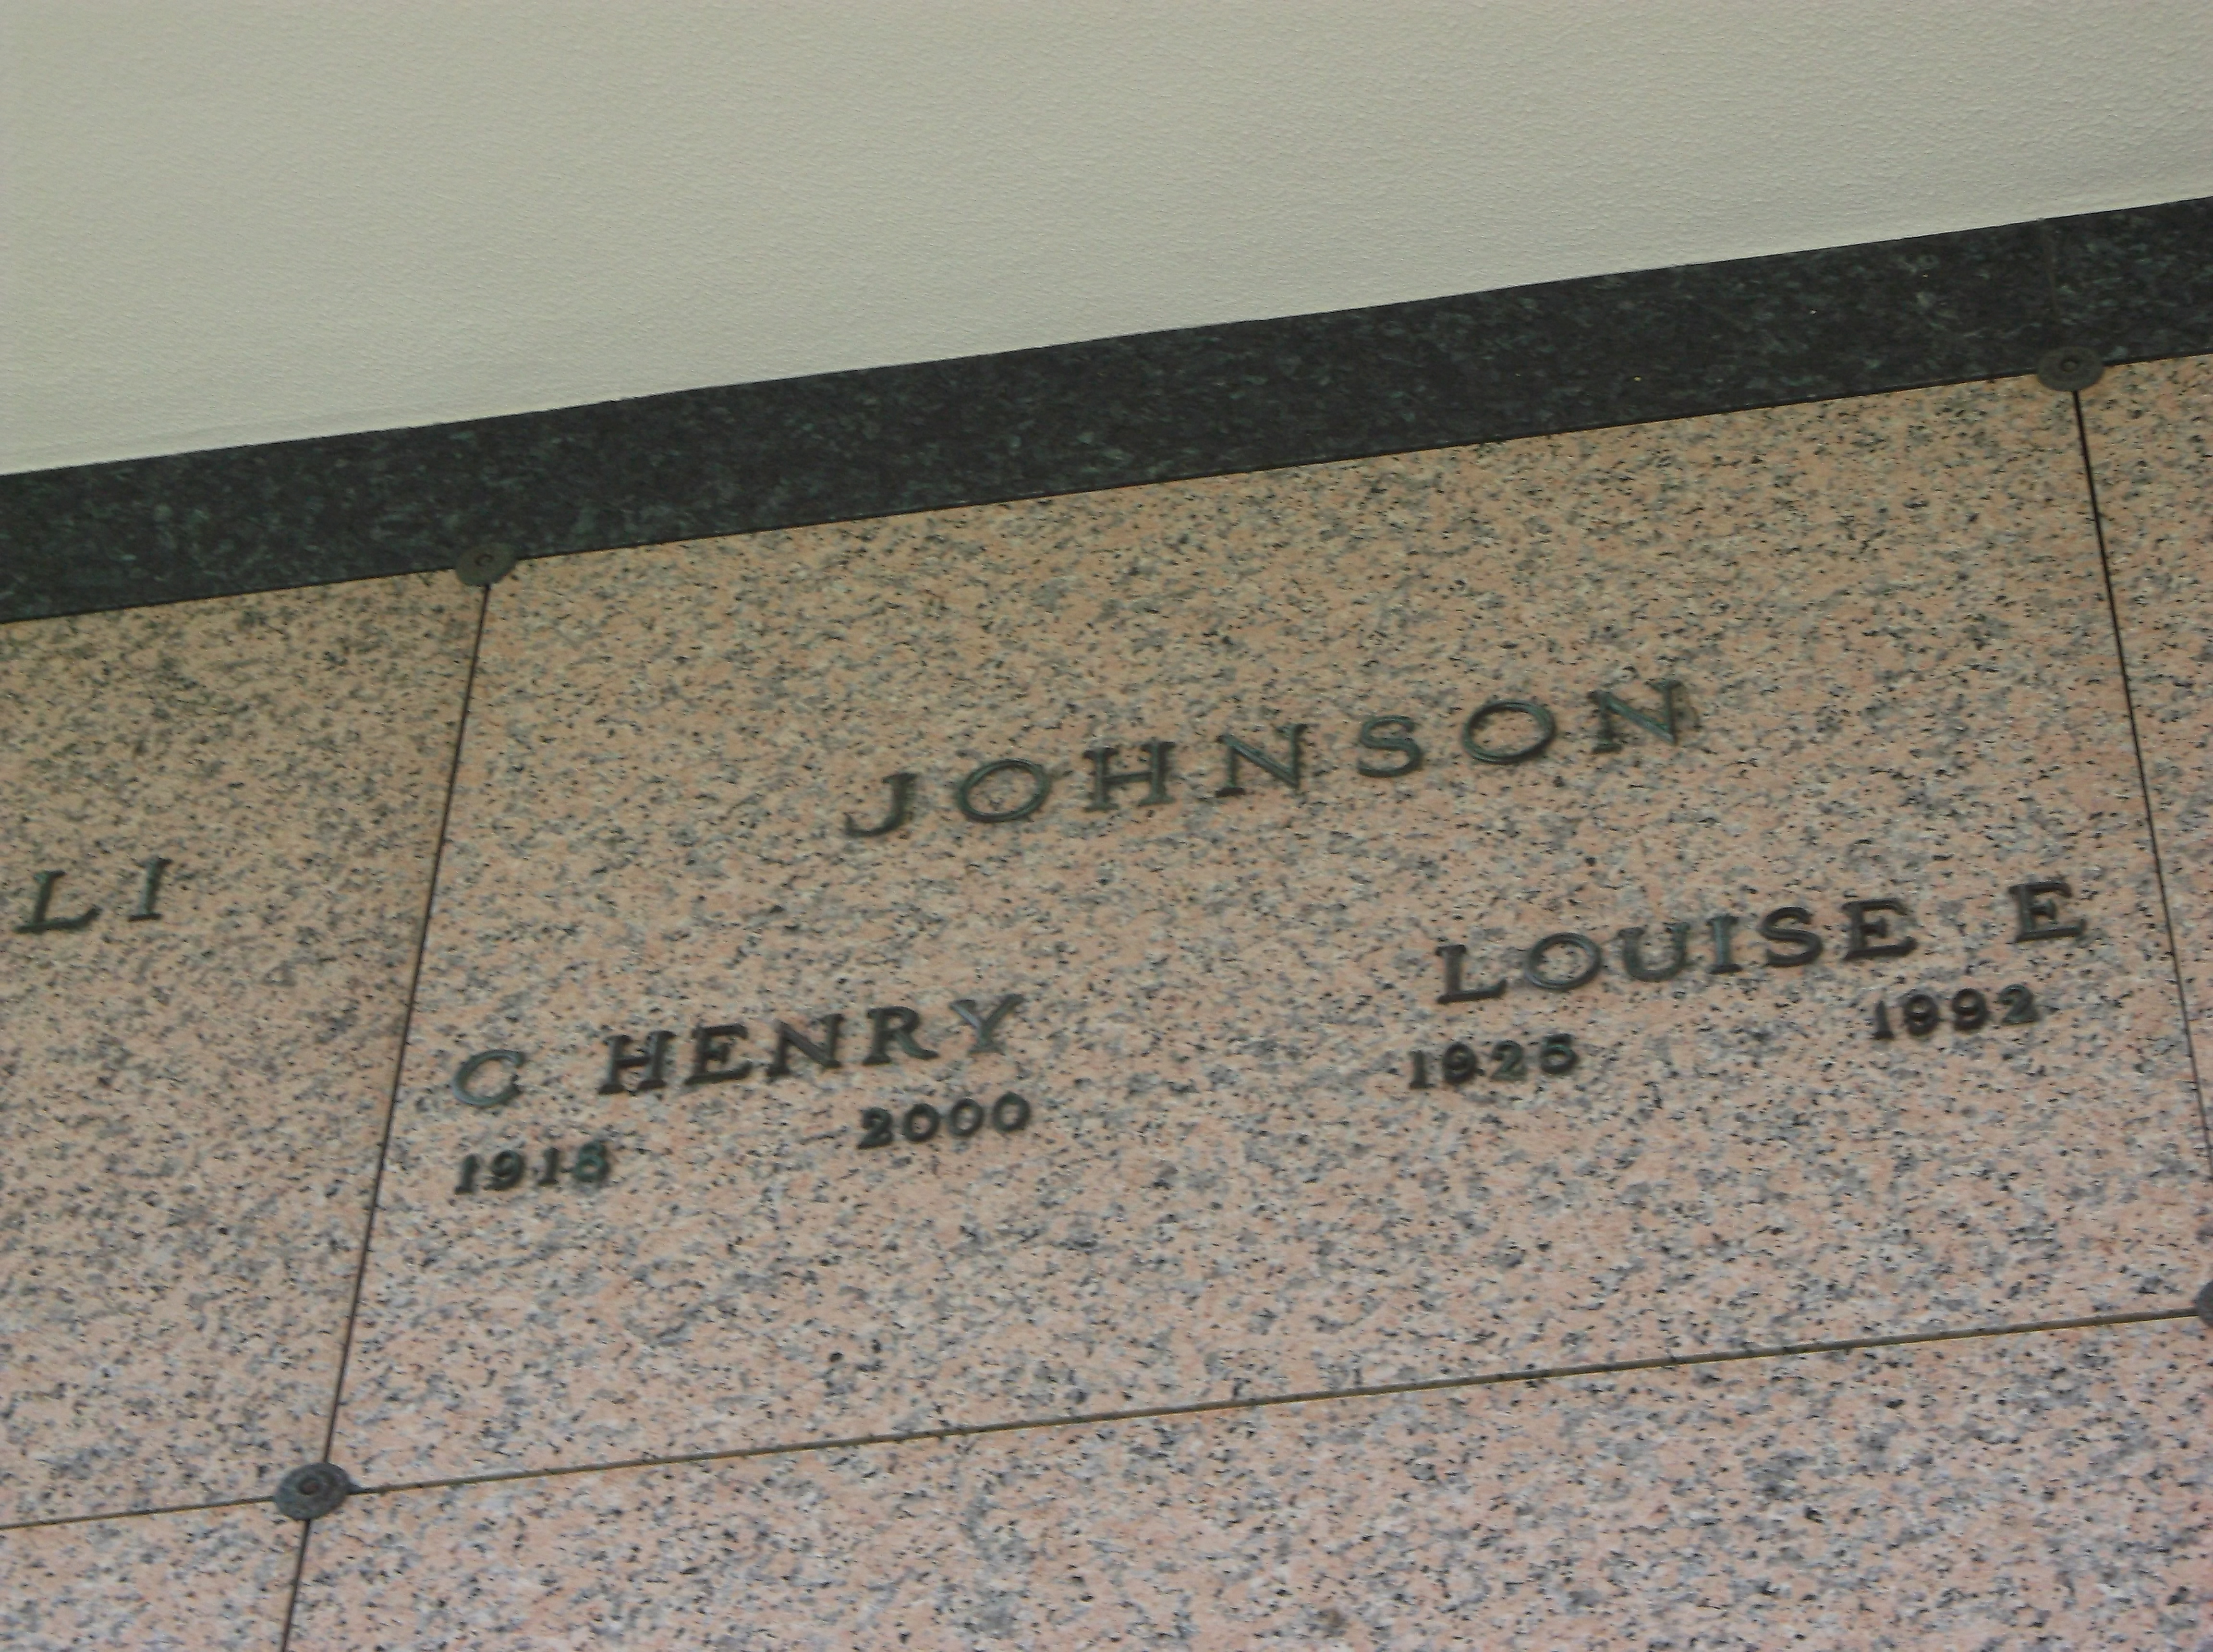 C Henry Johnson